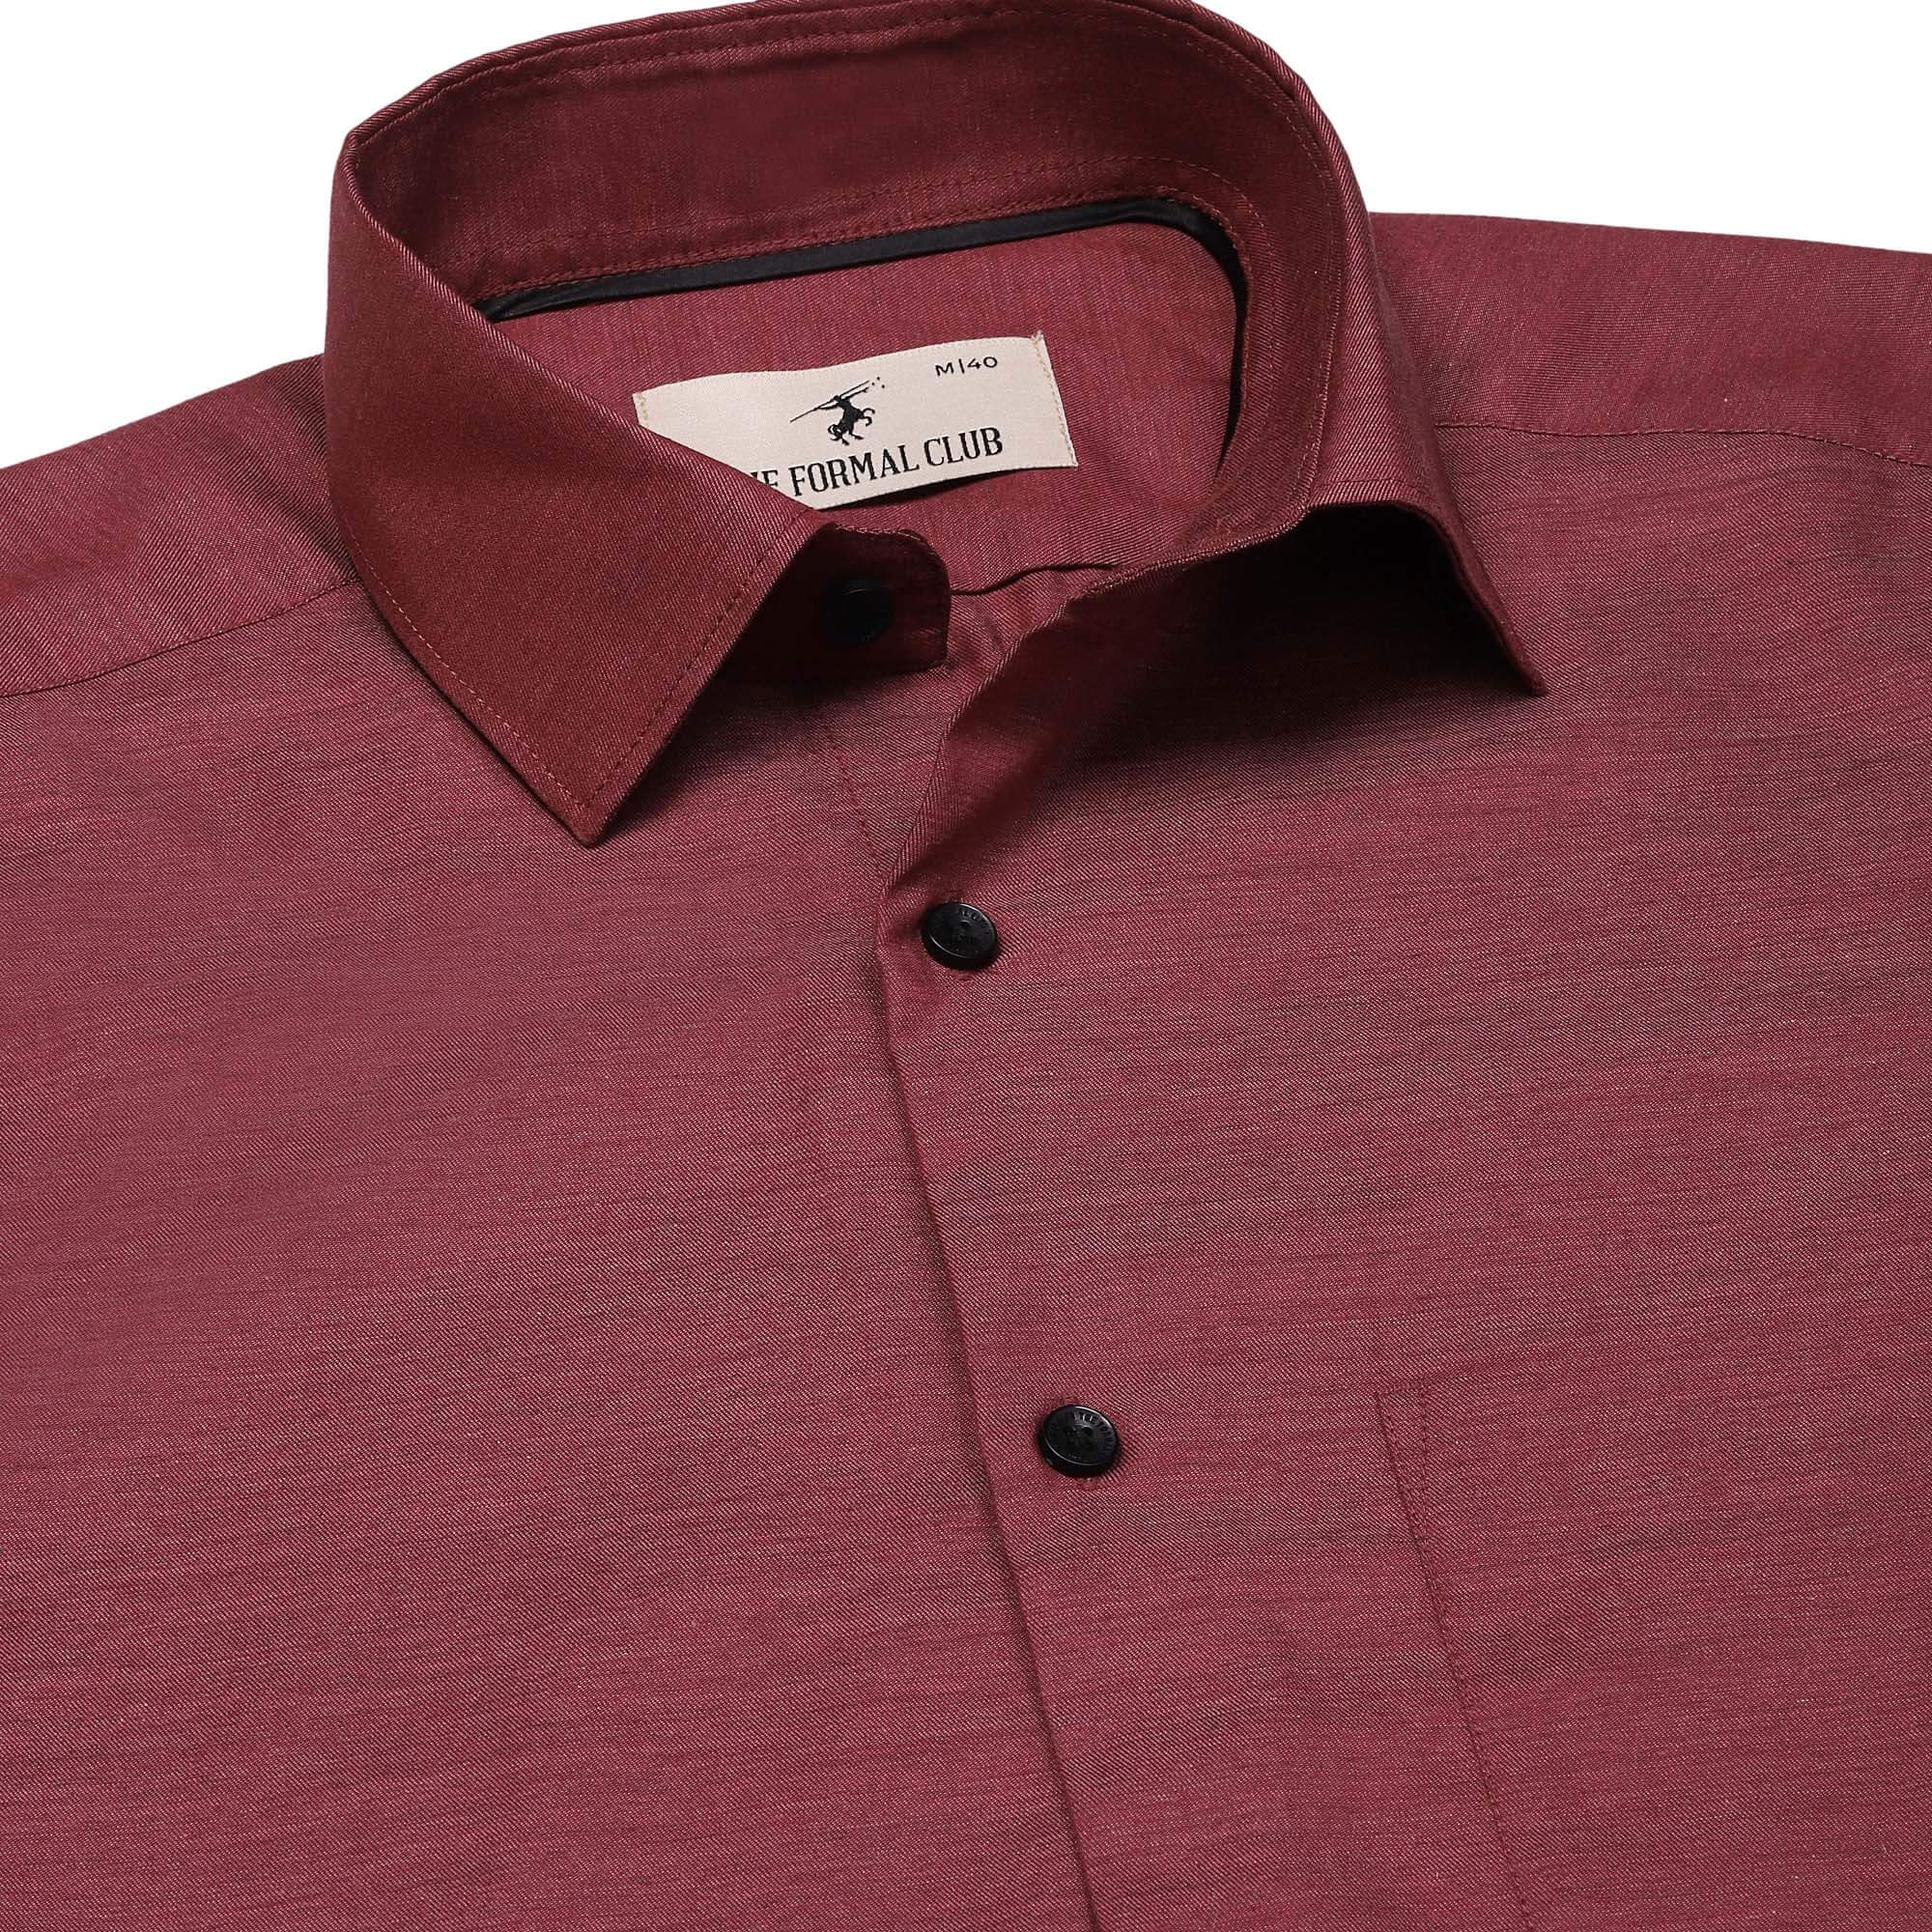 Blendix Twill Solid Shirt In Maroon Regular Fit - The Formal Club